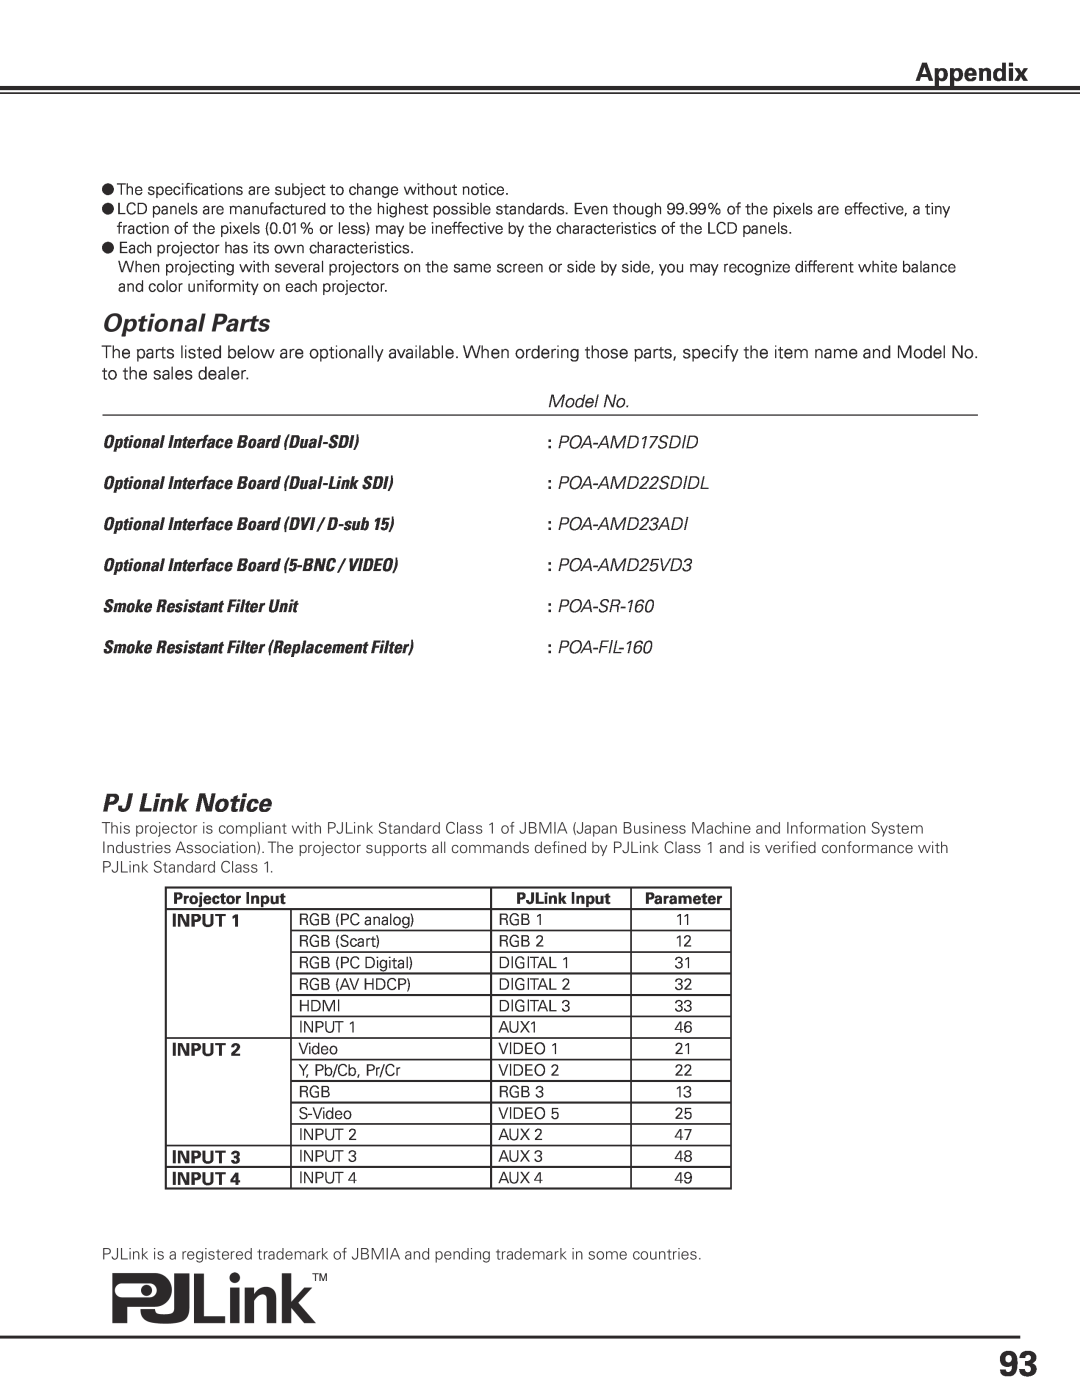 Sanyo HF15000L owner manual Optional Parts, PJ Link Notice, Appendix, Input 